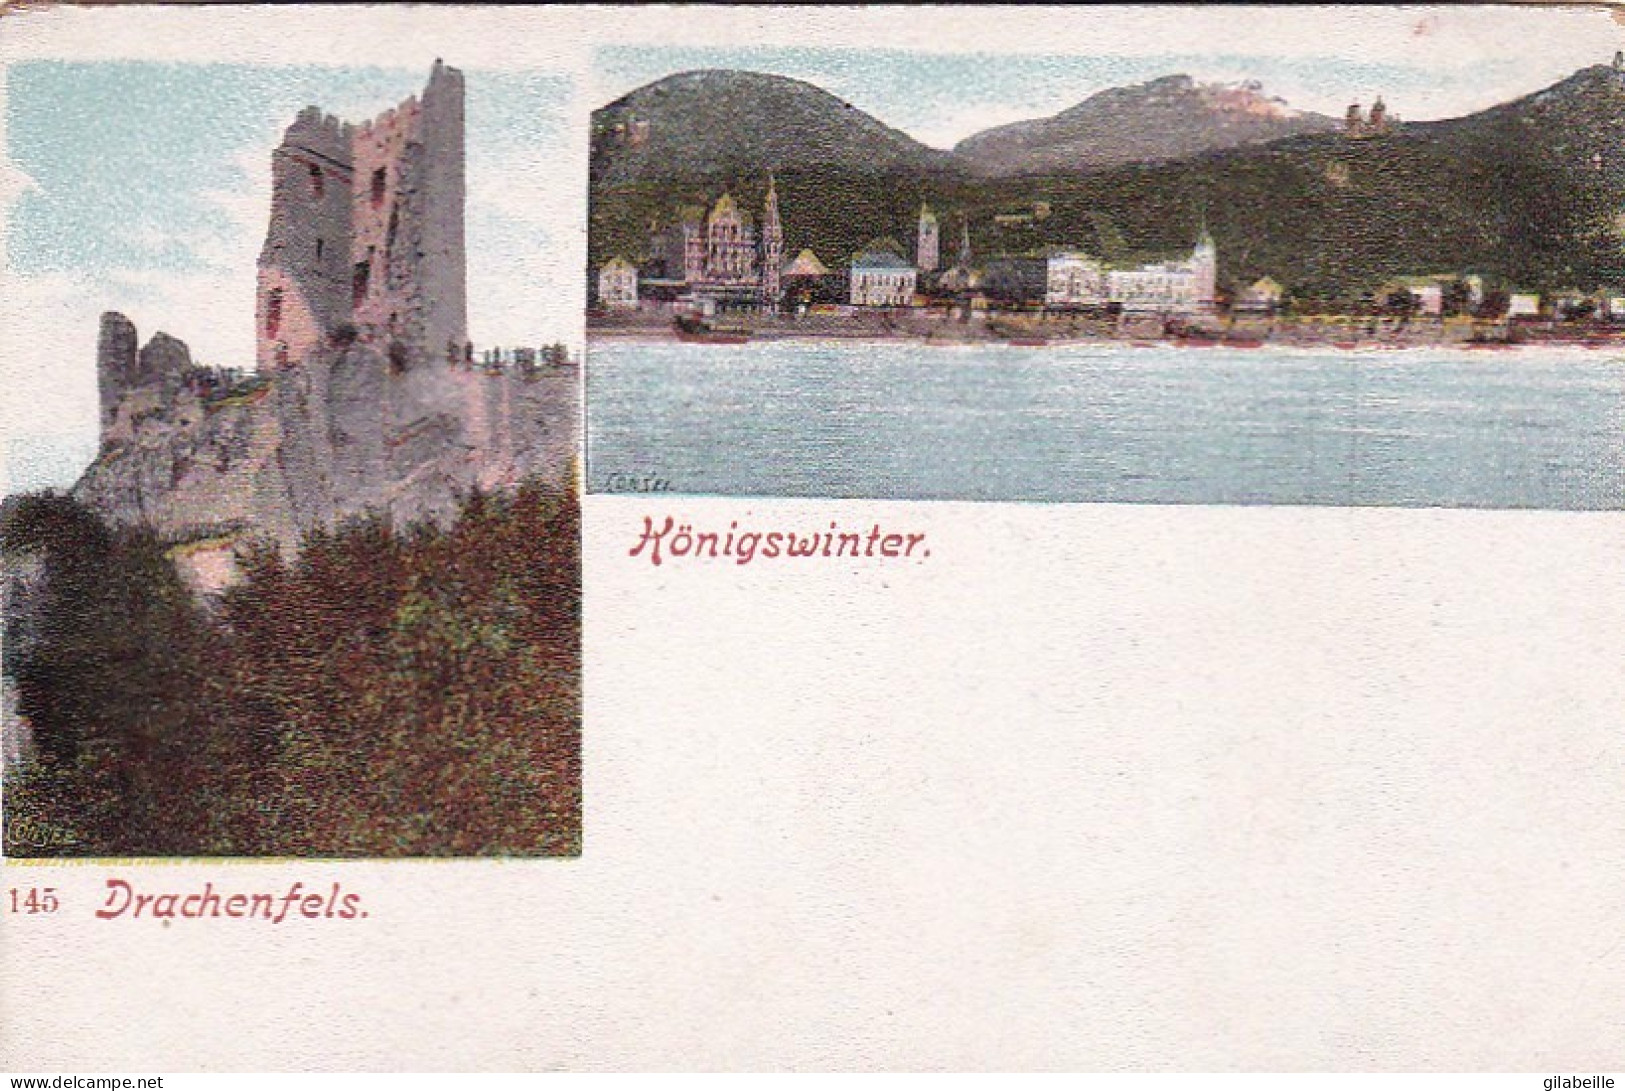 Drachenfels - Konigswinter - Königswinter